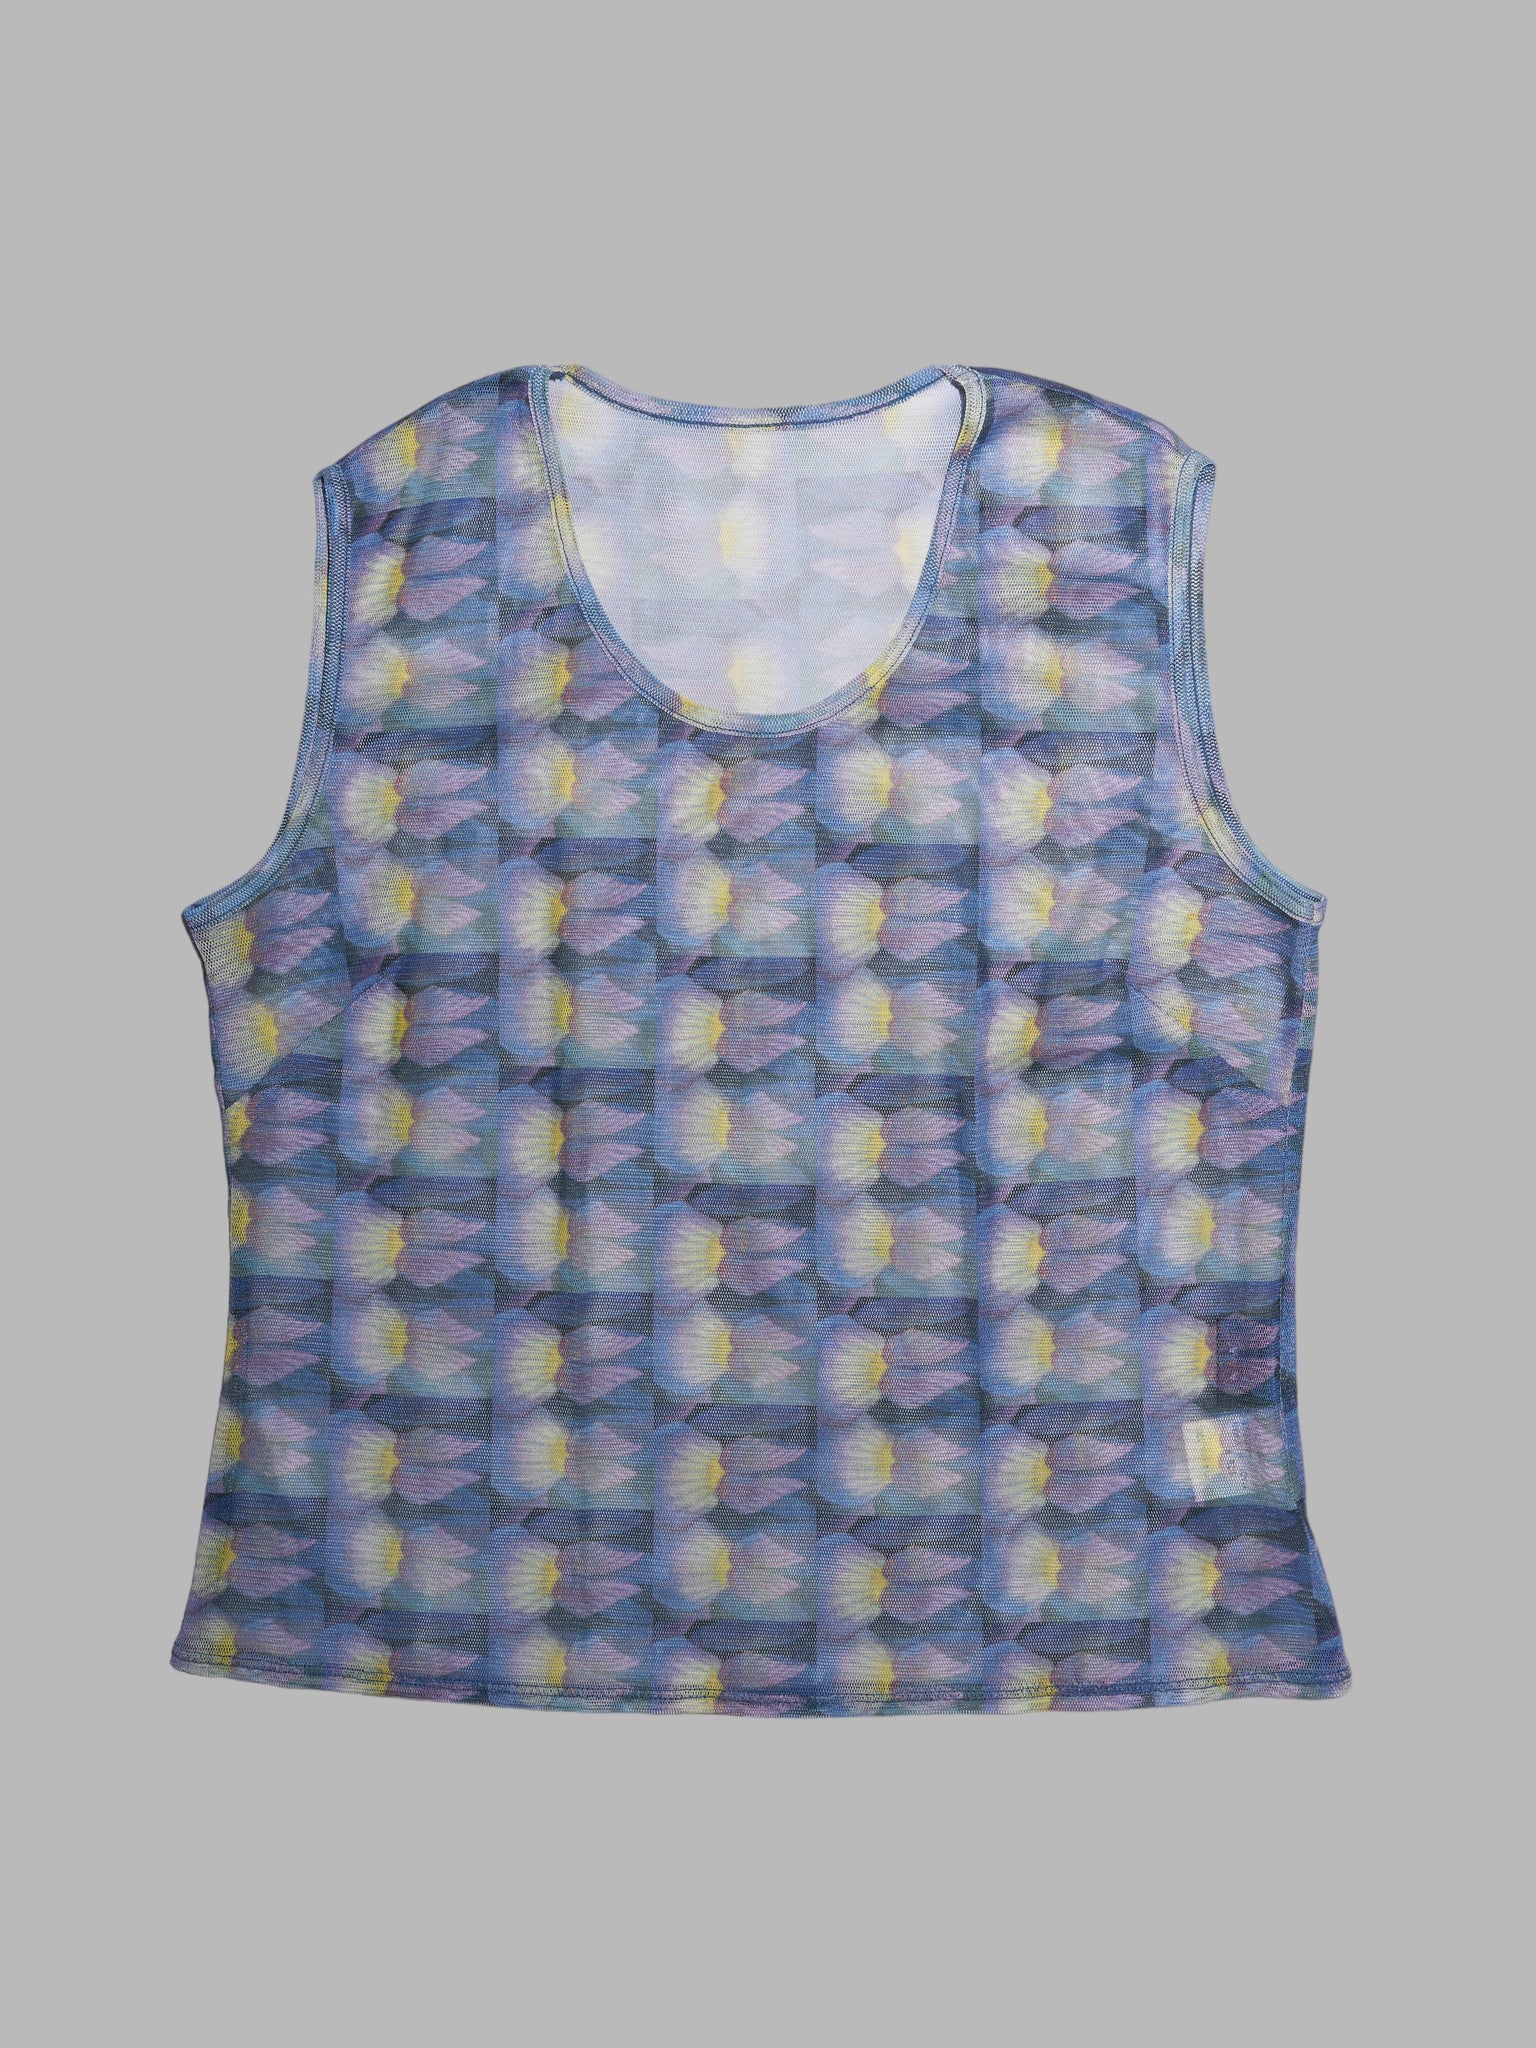 Wrinqle Inoue Pleats purple blue yellow shell pattern poly mesh sleeveless top